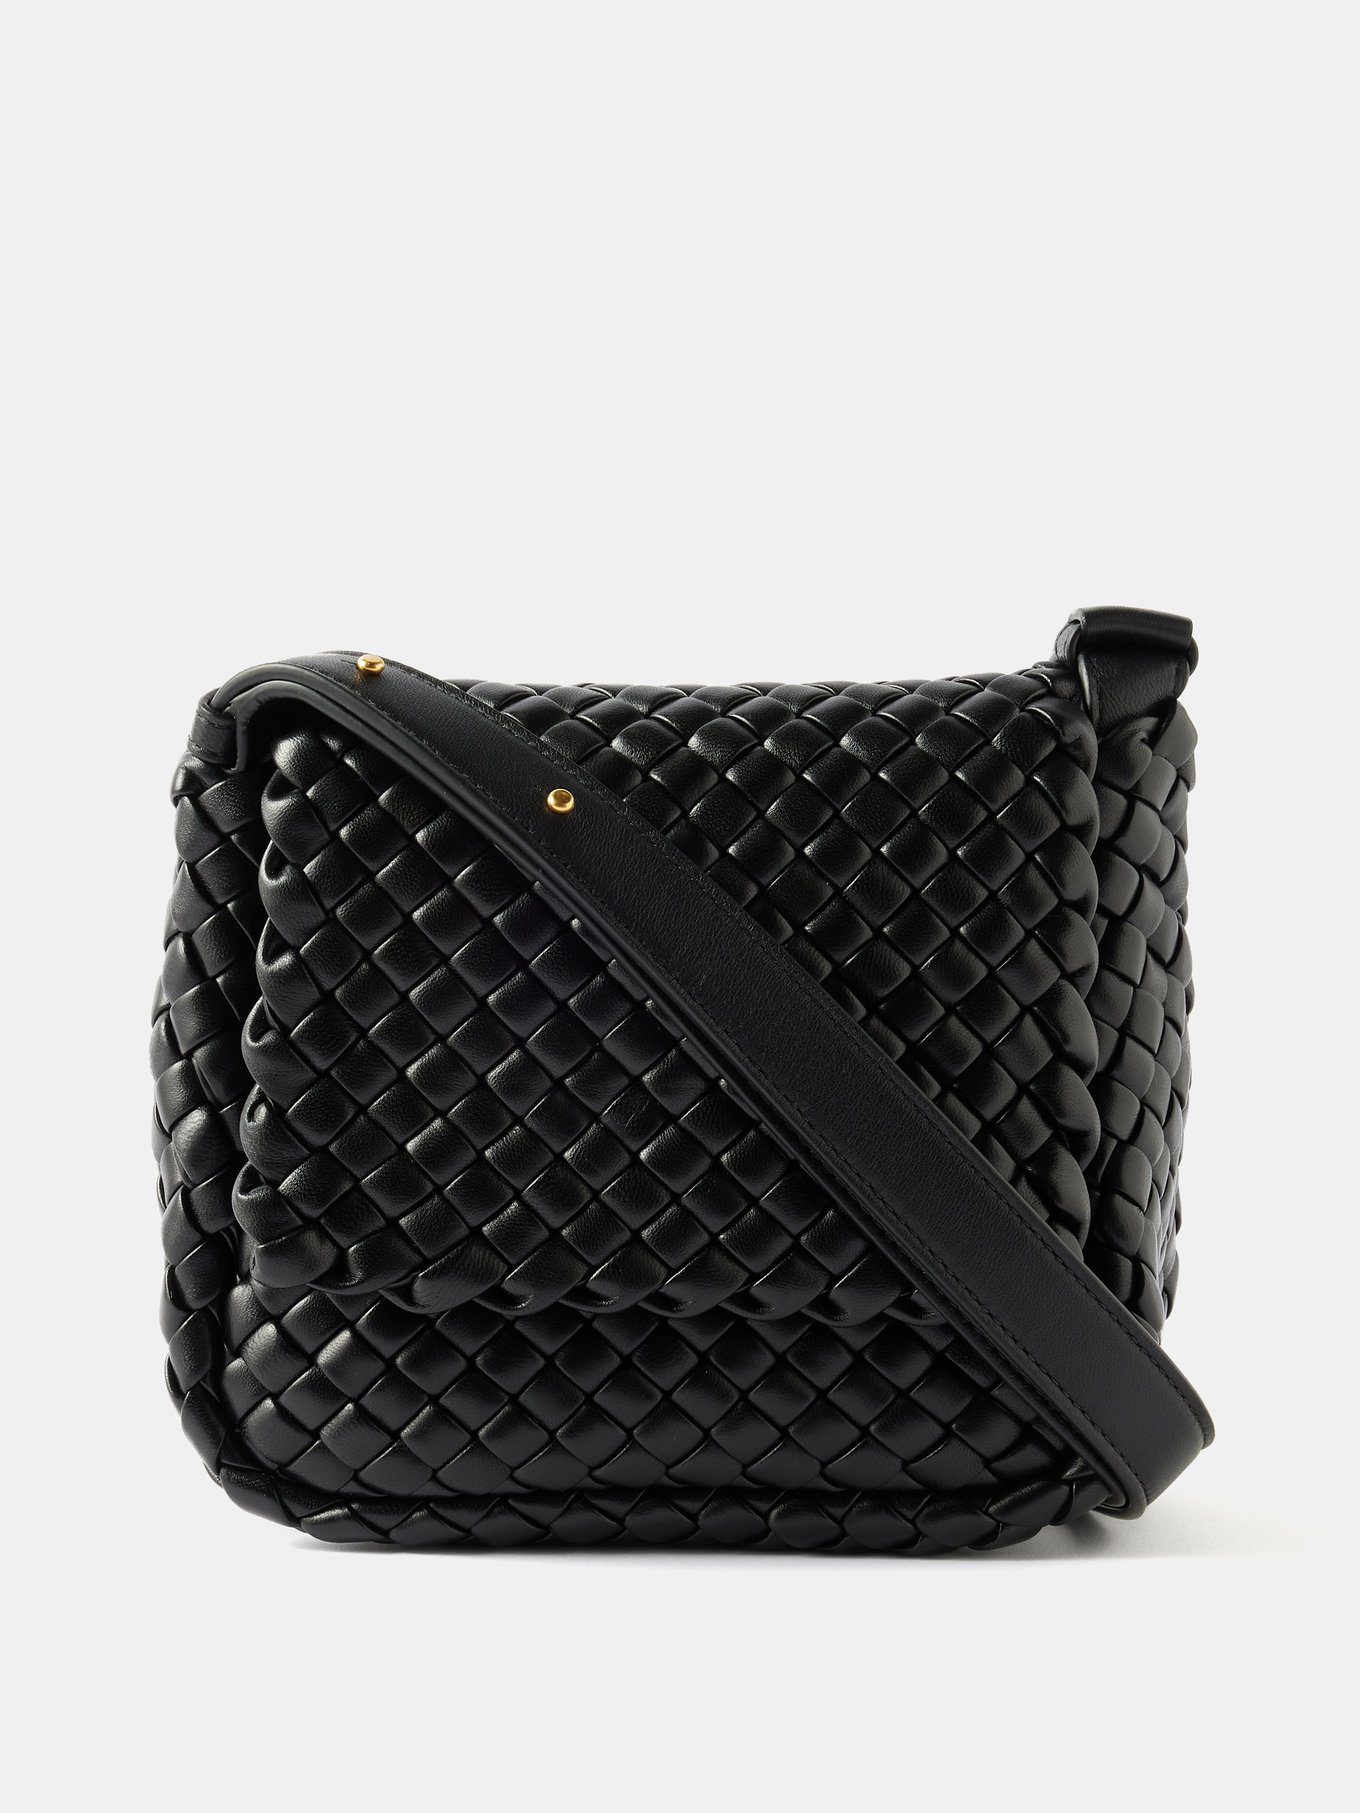 Bottega Veneta Women's Cobble Intrecciato Leather Shoulder Bag